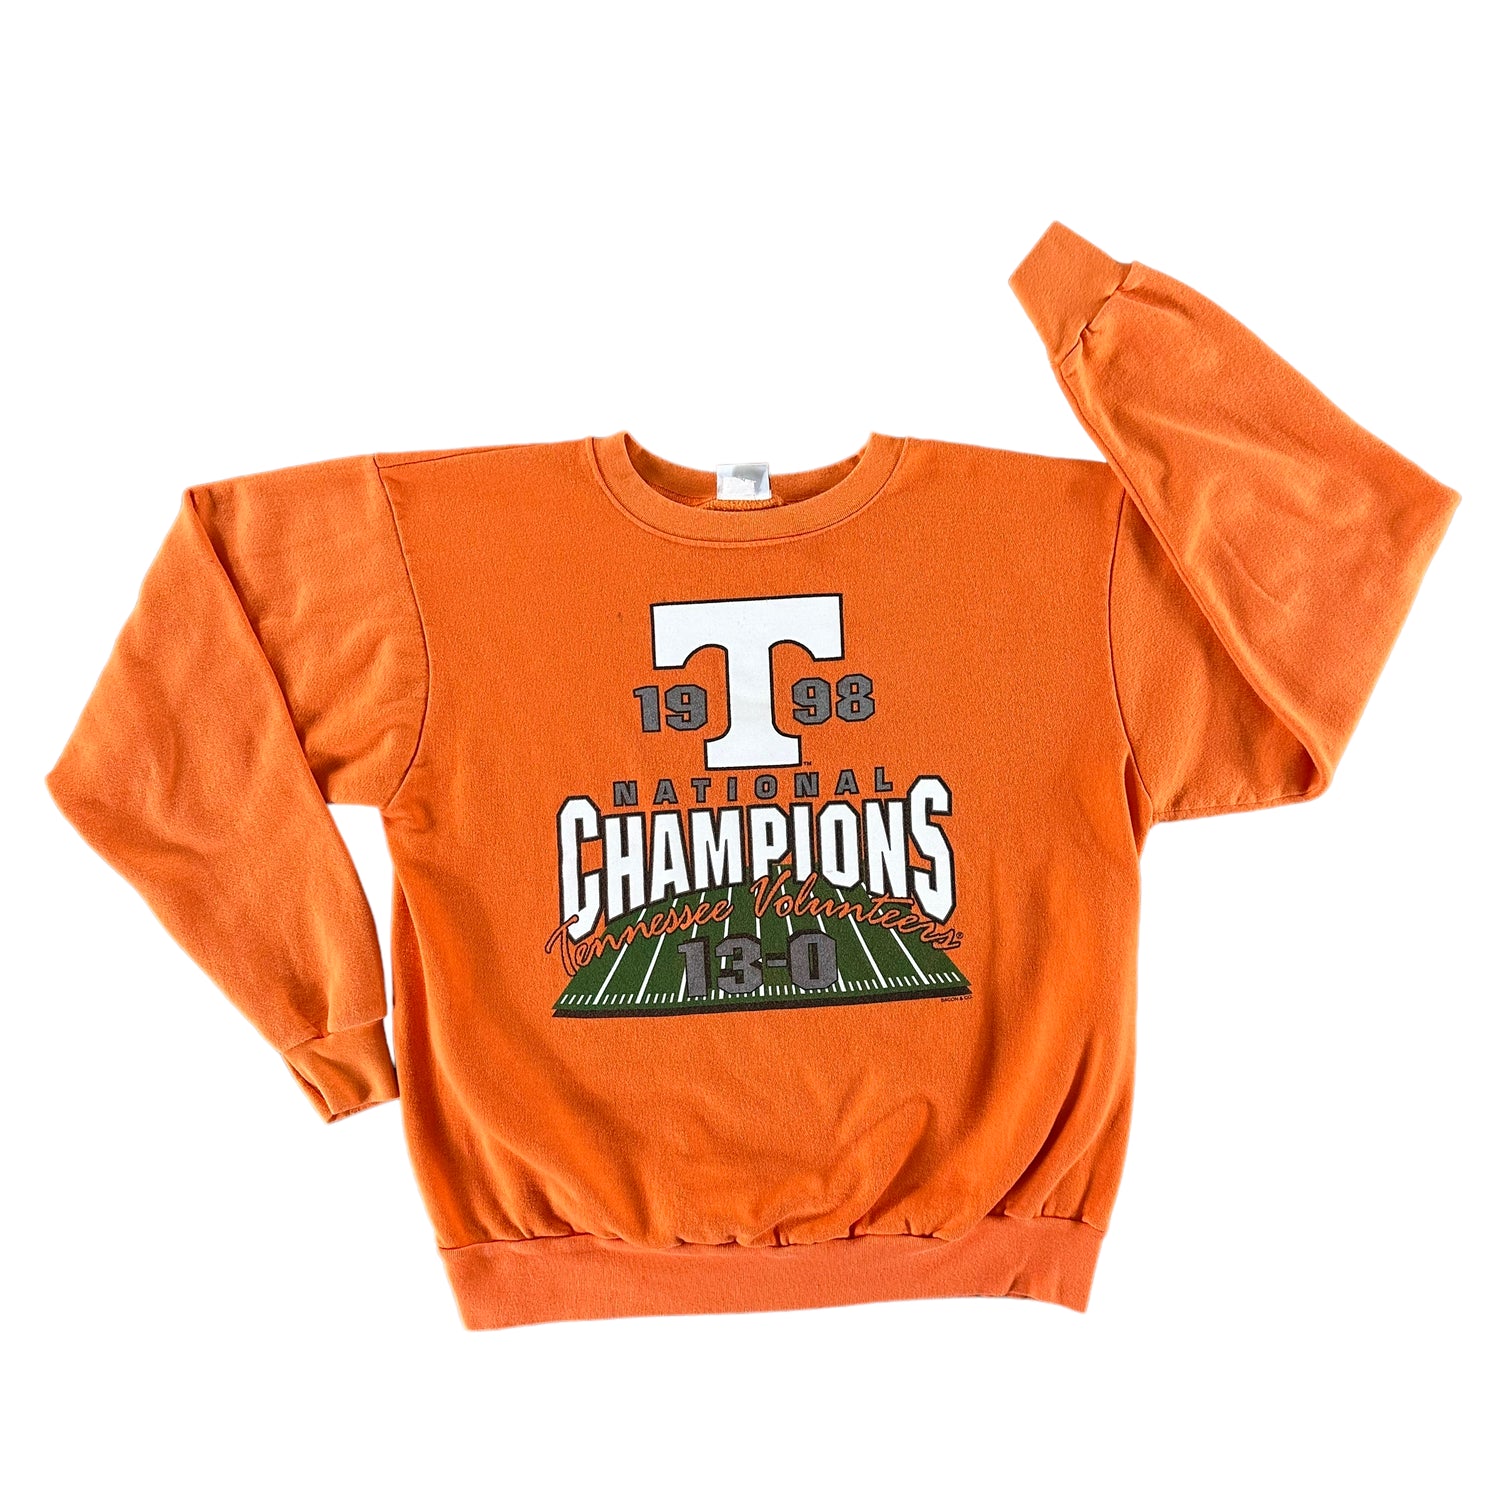 Vintage 1998 University of Tennessee Sweatshirt size XL